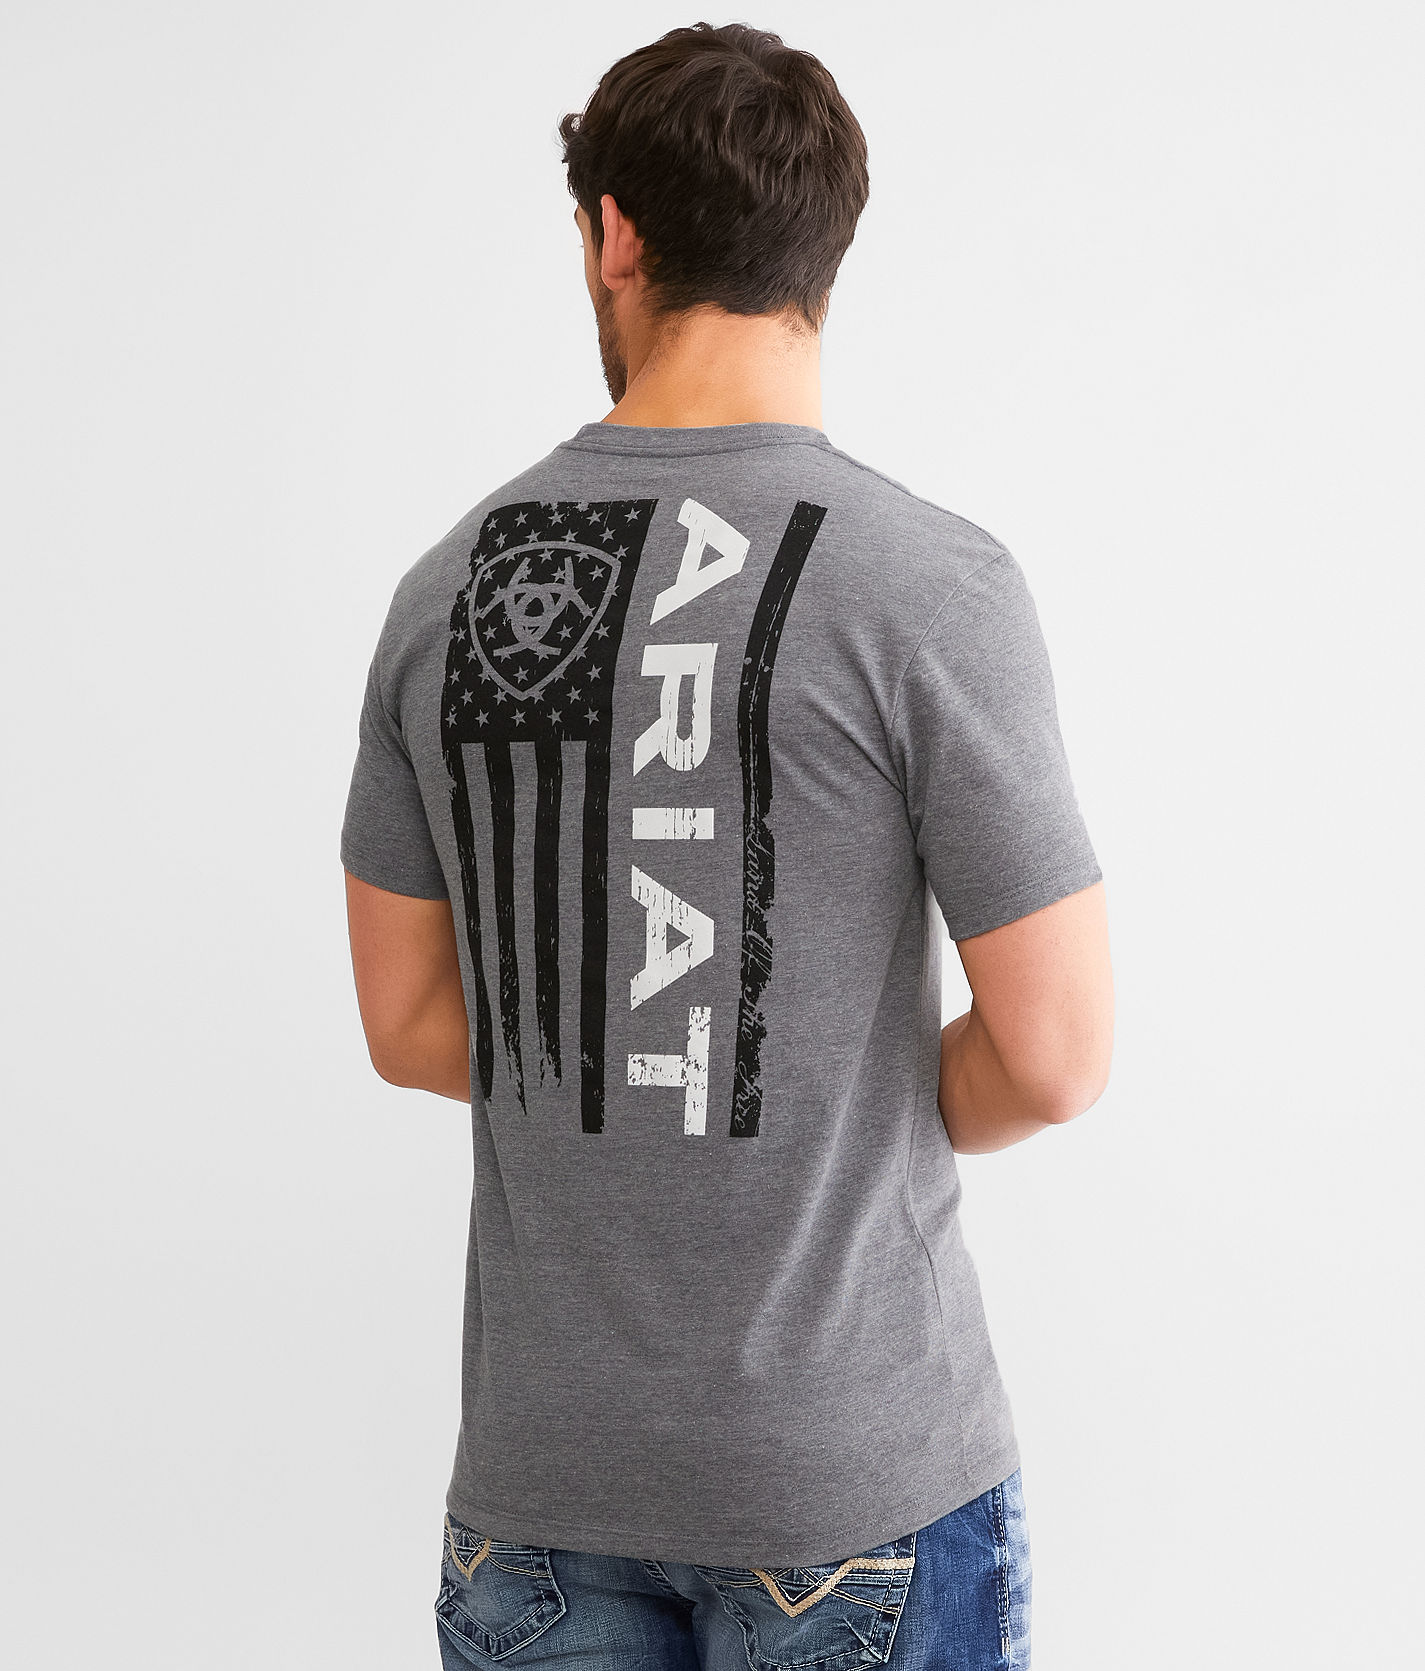 Product Name: Ariat Men's Zuni Flag Logo Short Sleeve Graphic T-Shirt